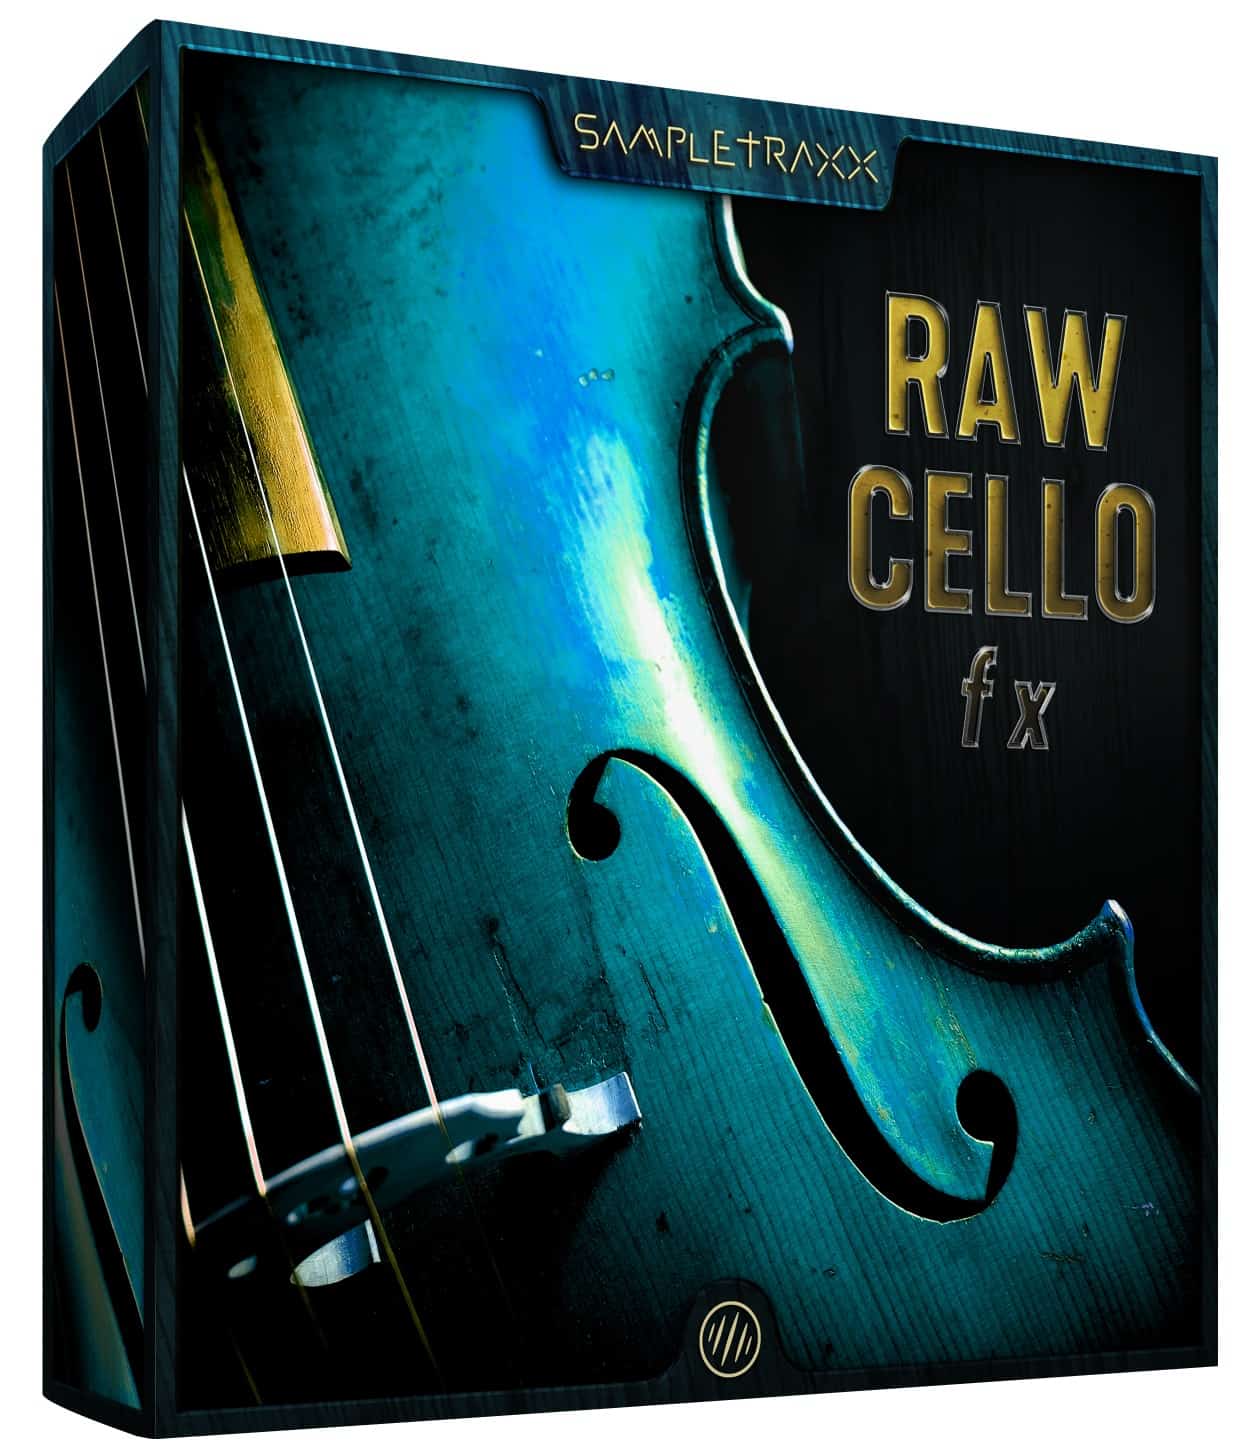 SampleTraxx Releases RAW CELLO FX Organic Cello Sound Effects